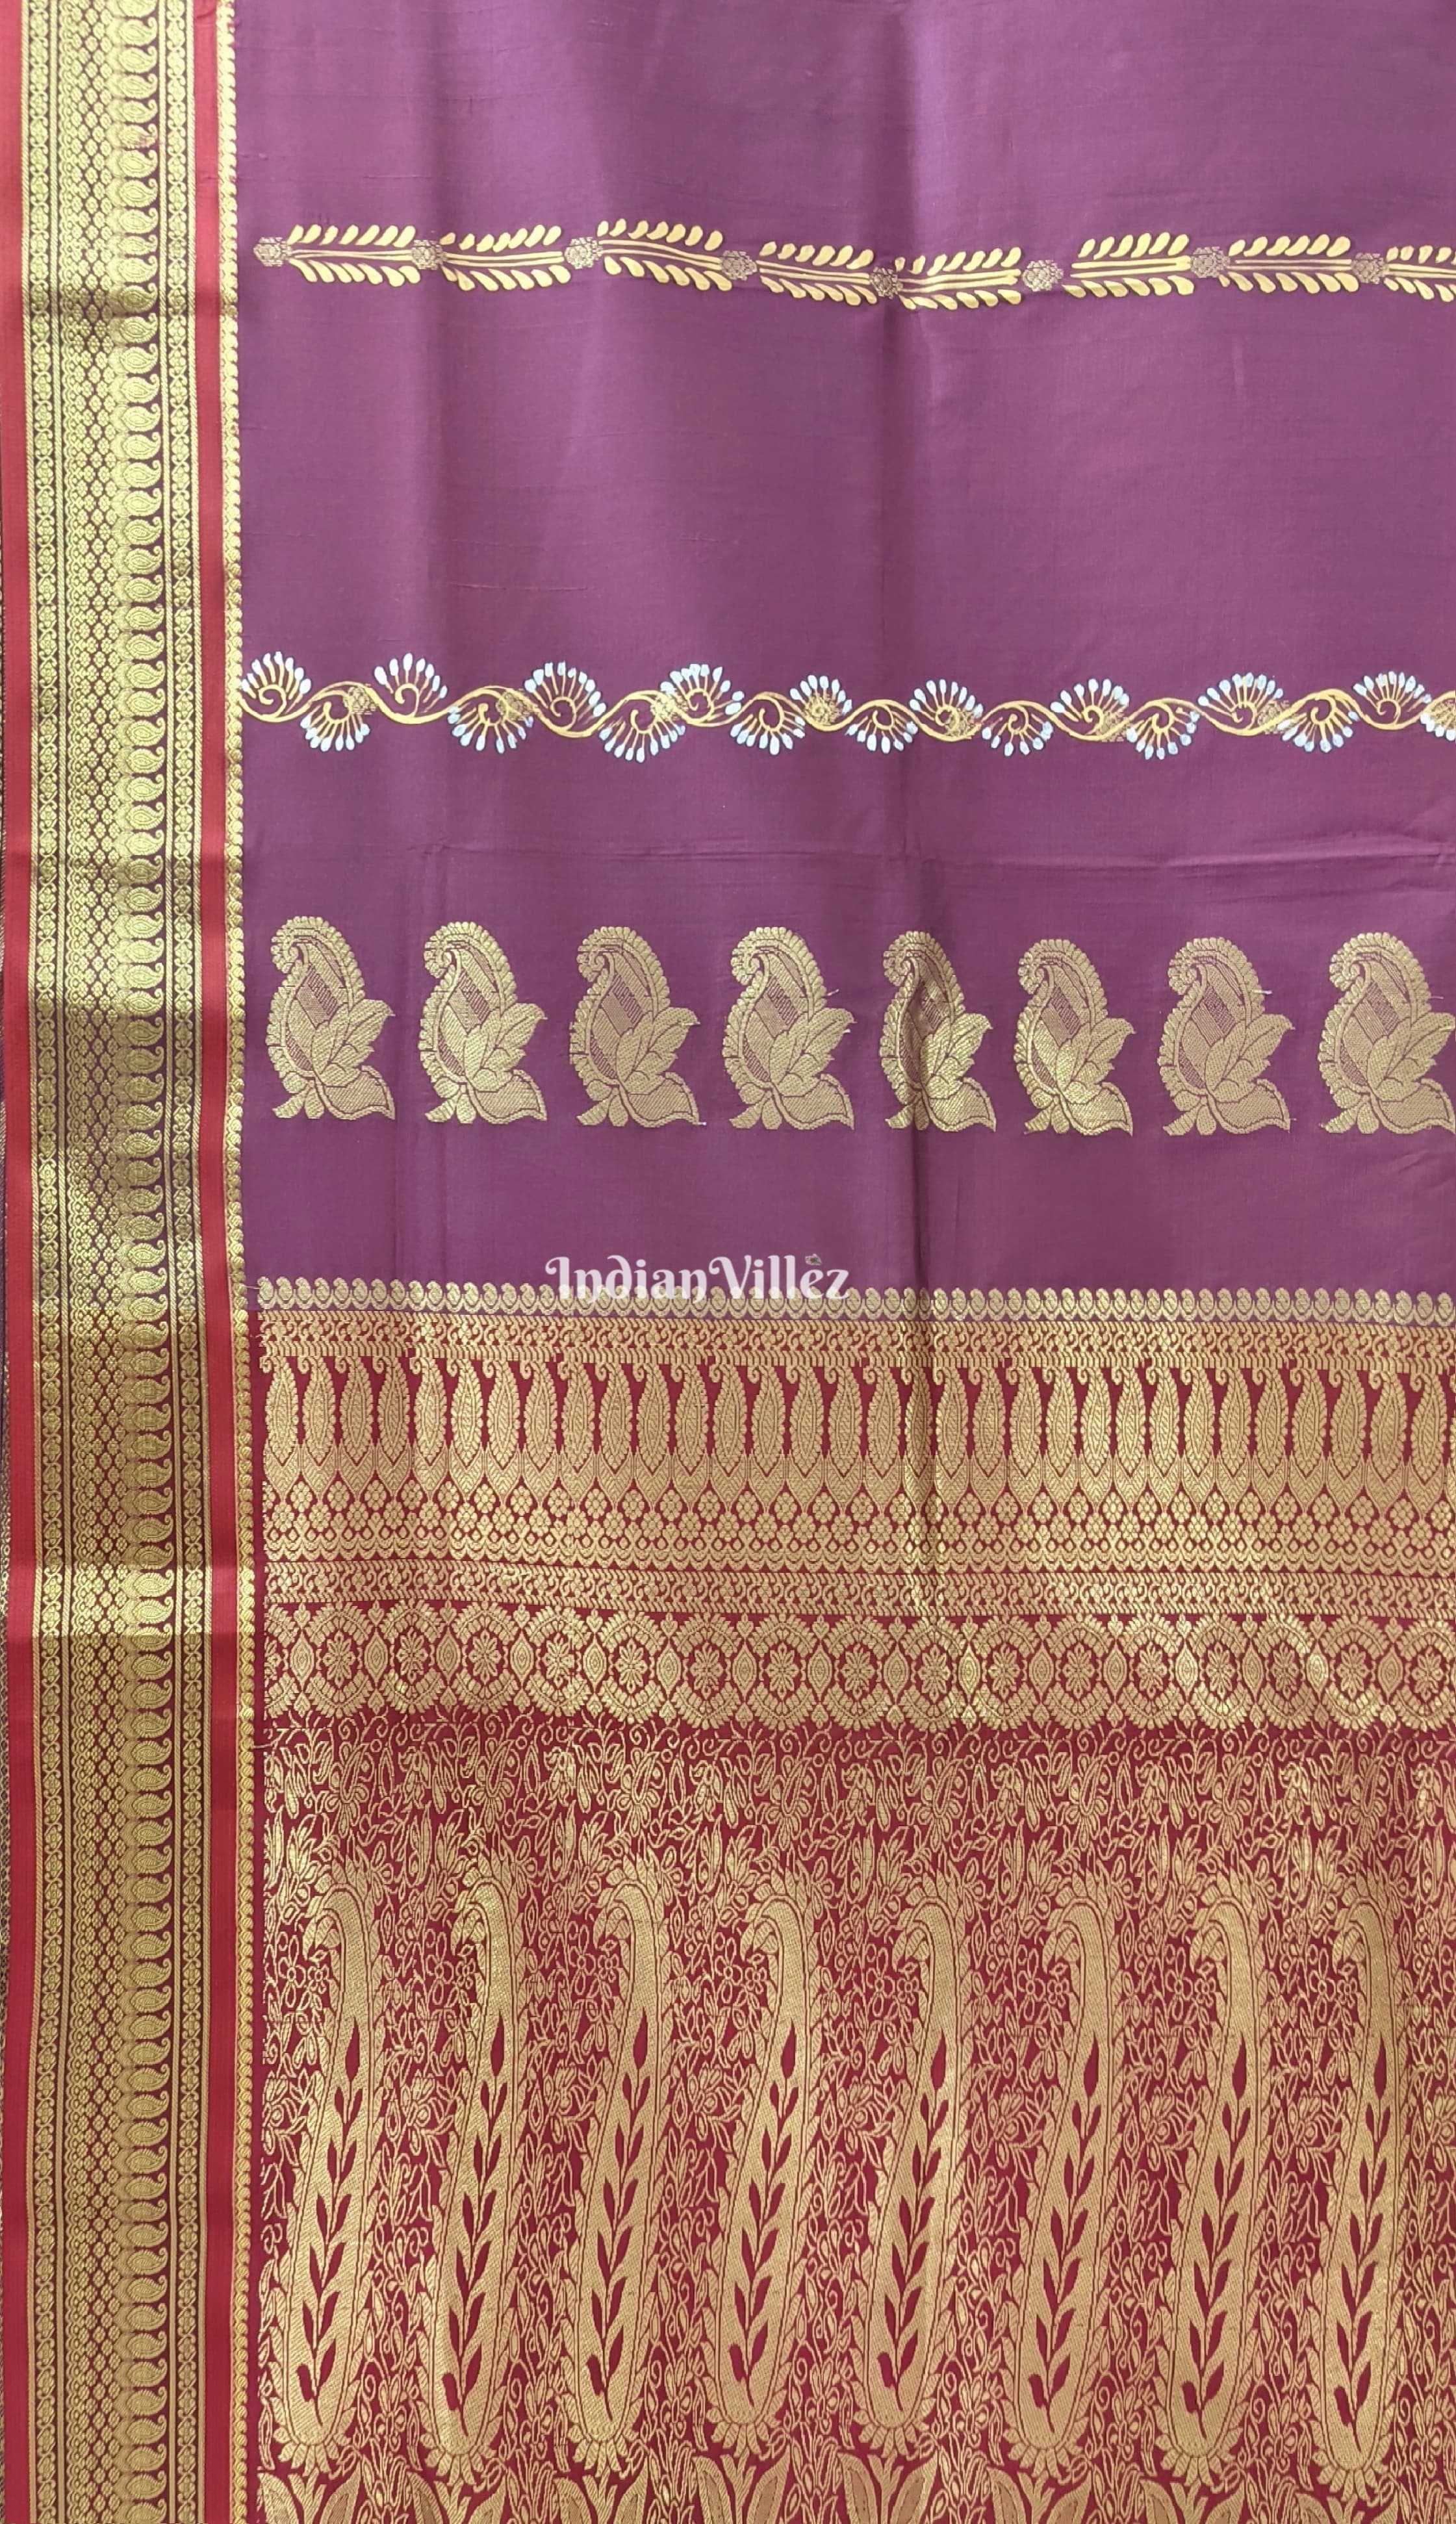 Muberry Pattachitra Art on Kerala Tissue Saree